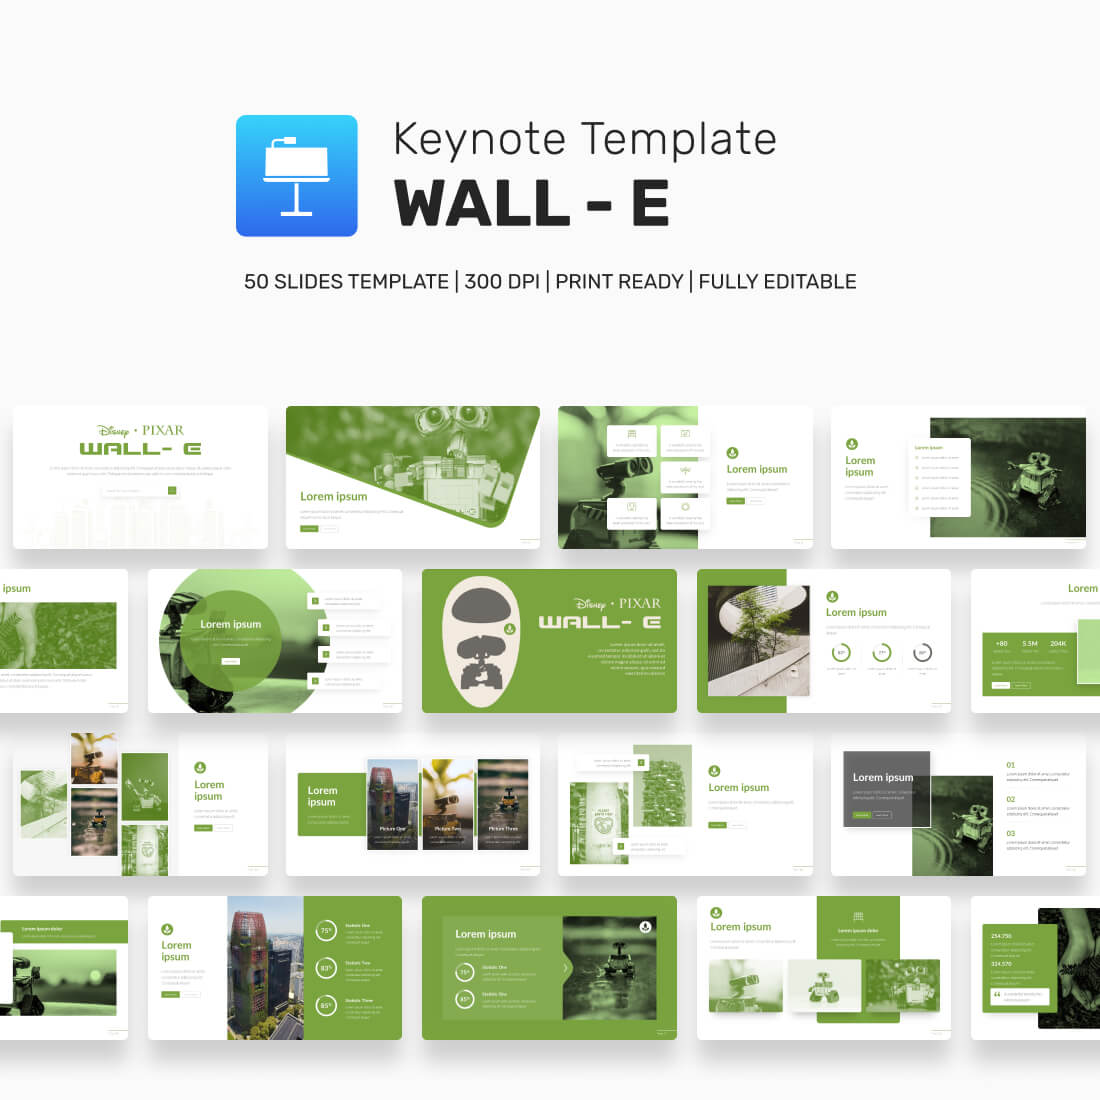 Wall-E Disney Keynote Presentation Template cover image.